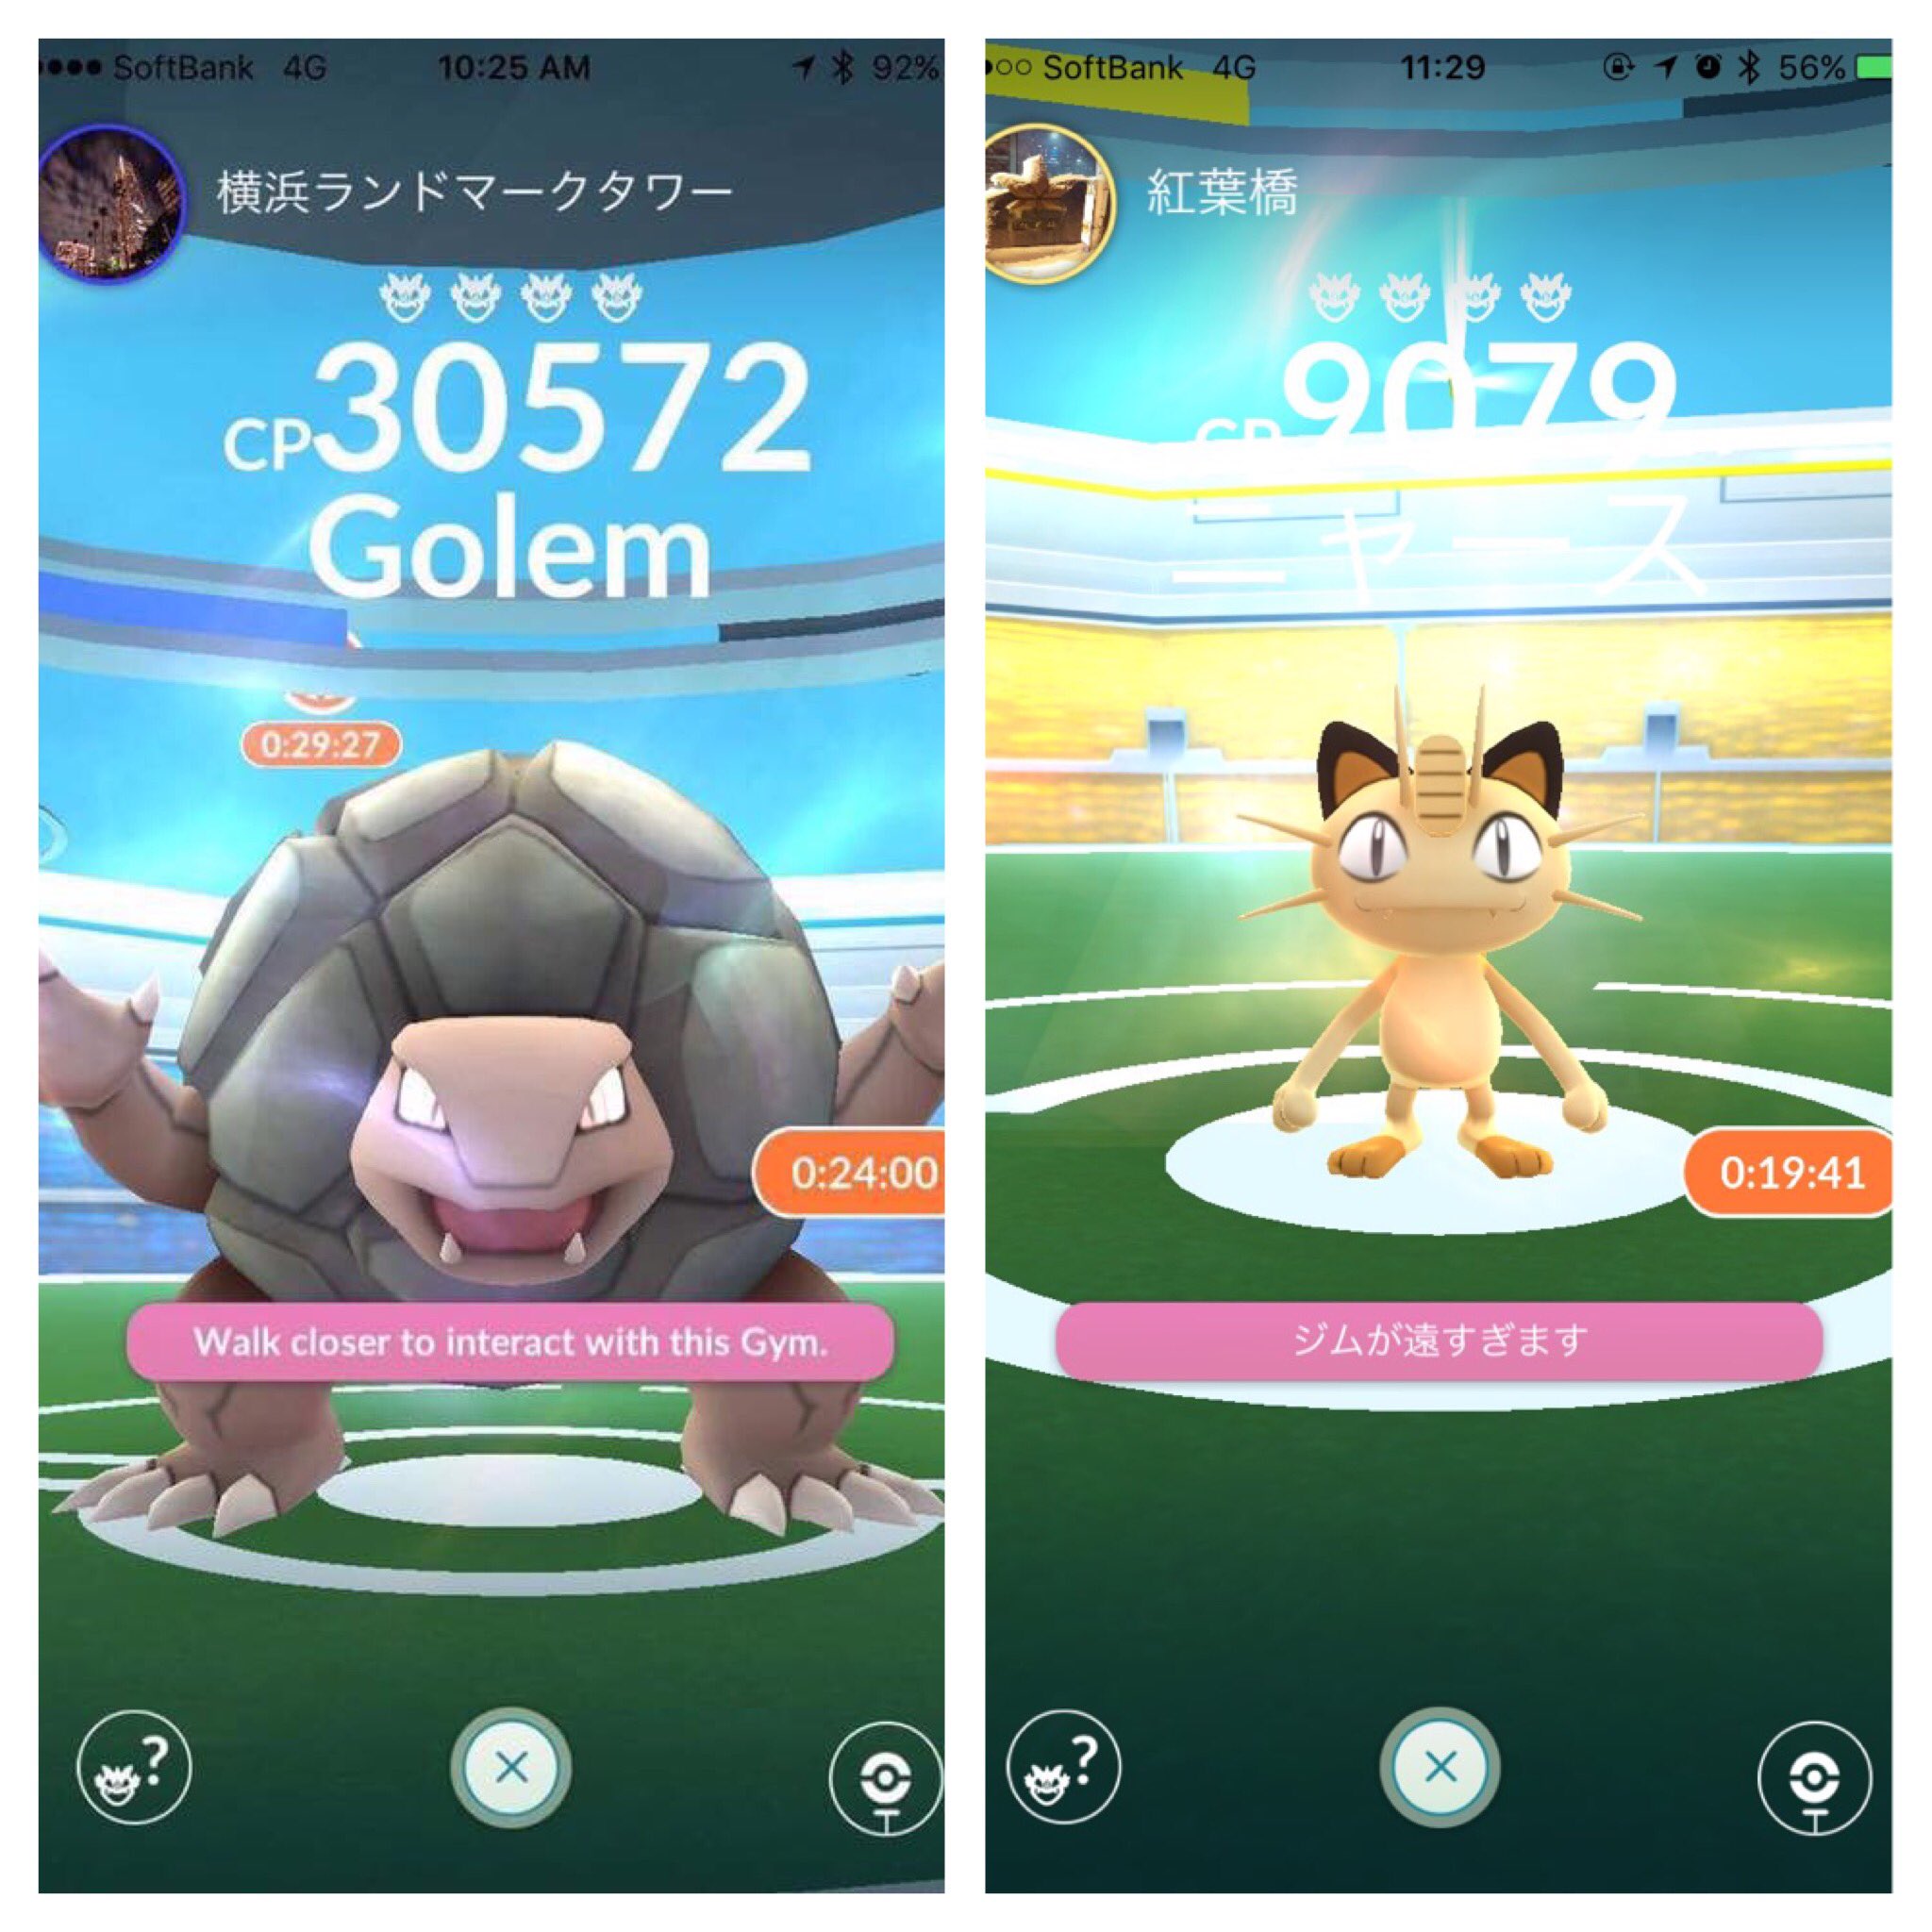 Sanctuary semafor folder FleeceKing on Twitter: "New Golem and Meowth raids spotted in Japan! (Not  my pictures) https://t.co/bvyDhGetsD" / Twitter